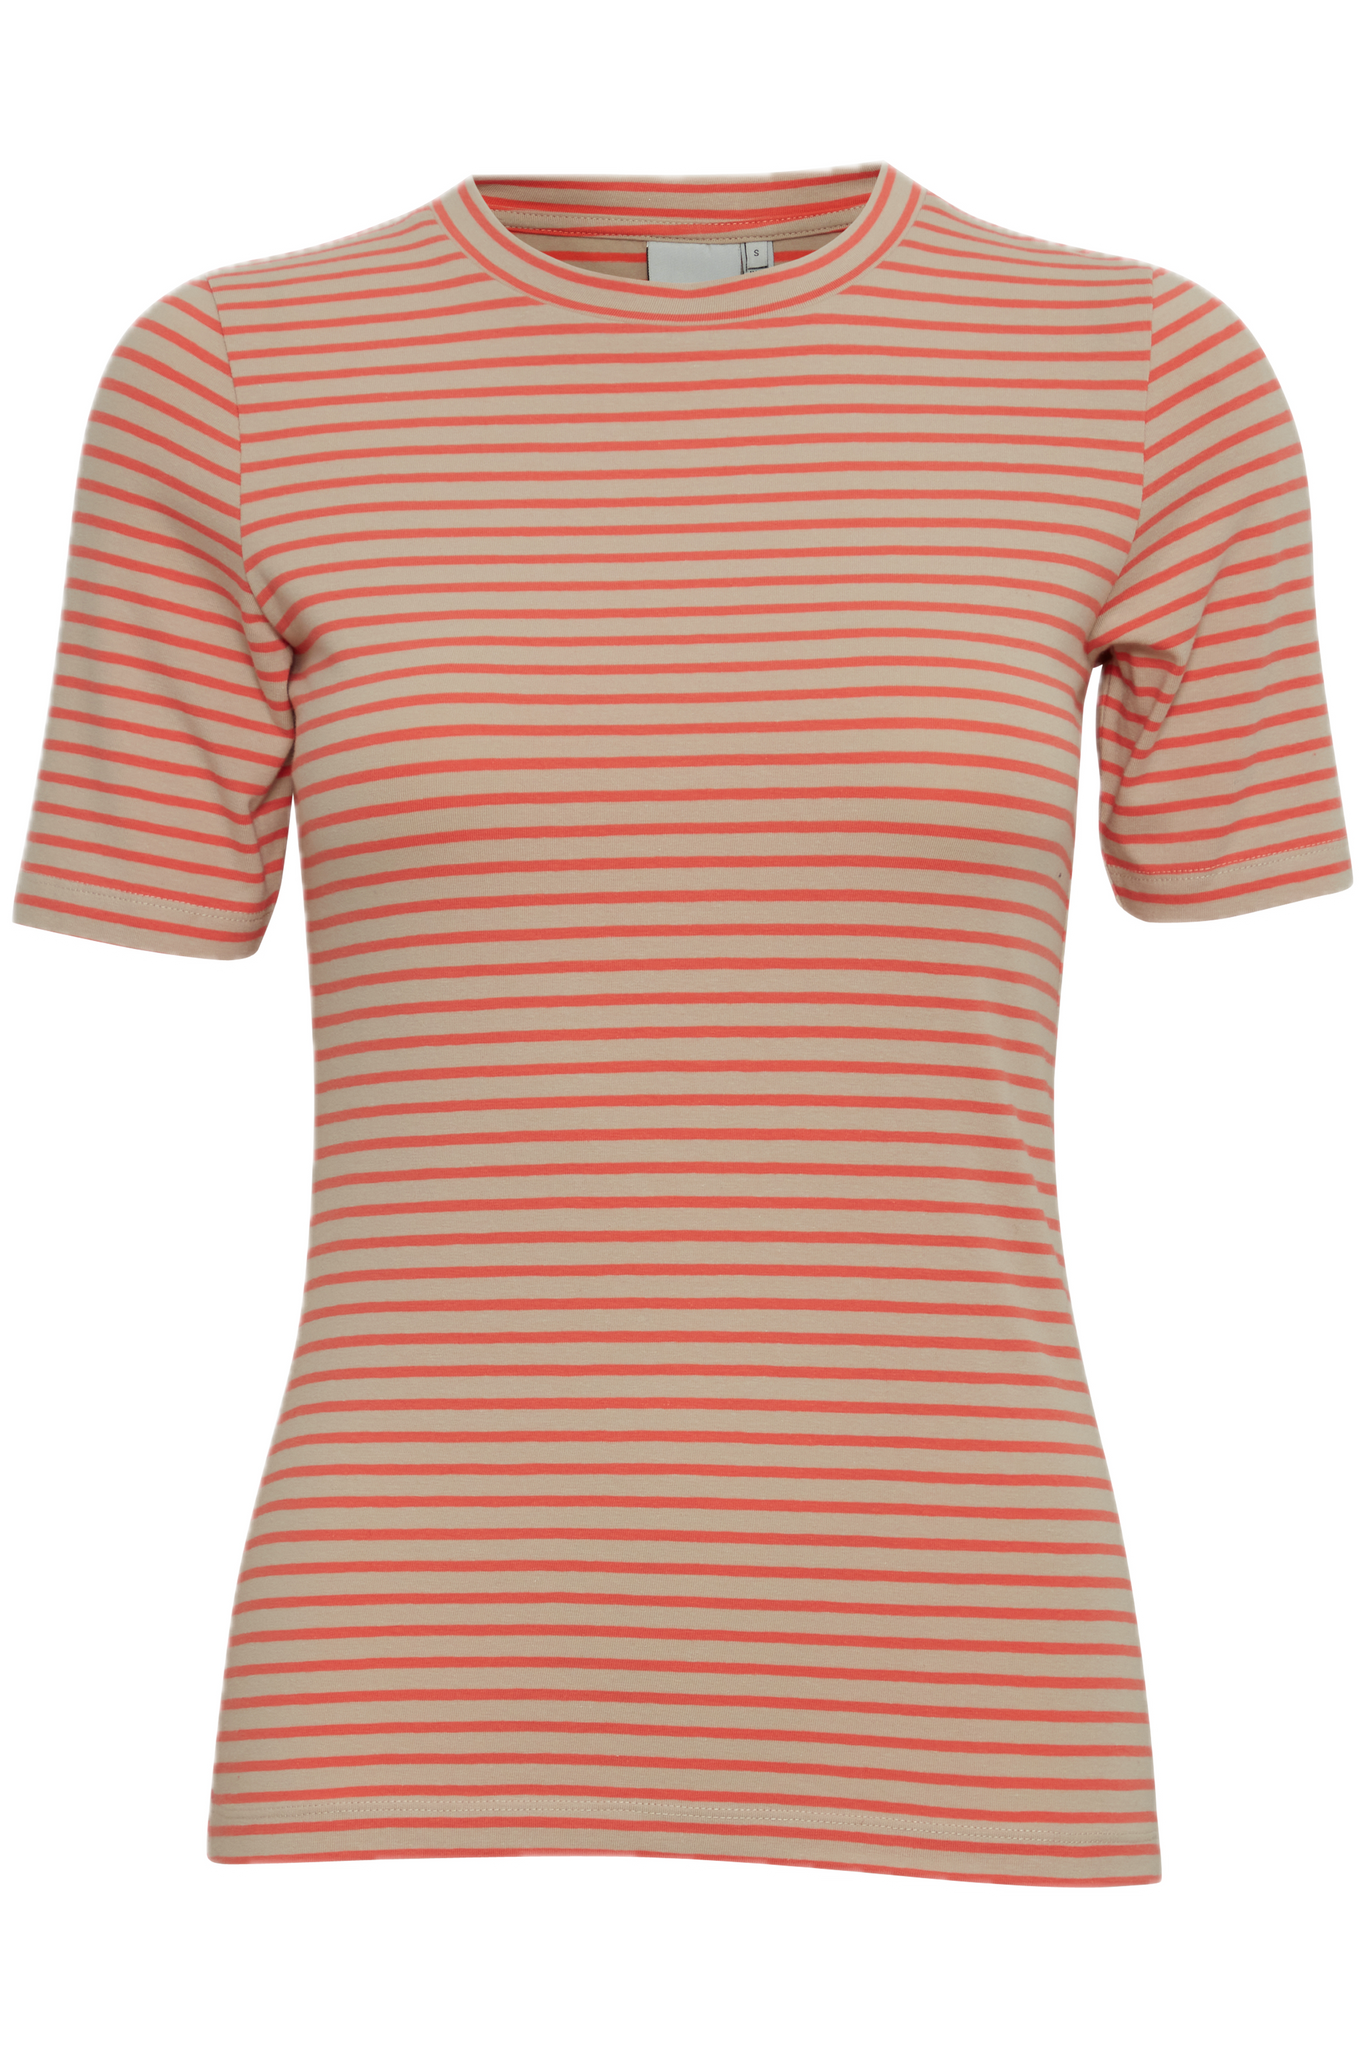 ICHI Mira Hot Coral Stripes T-Shirt